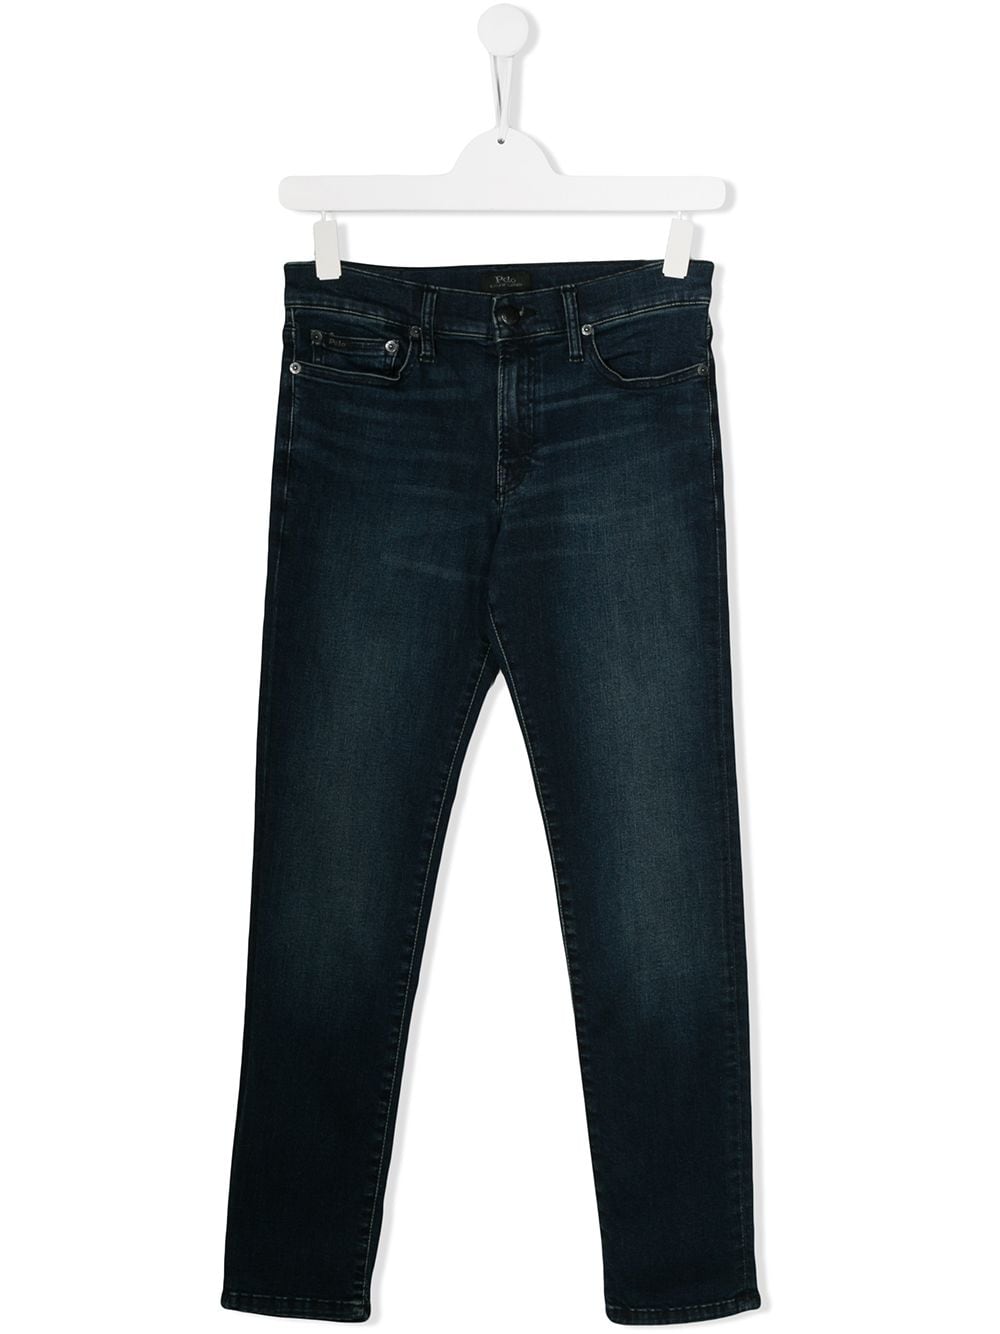 Blue cotton skinny jeans